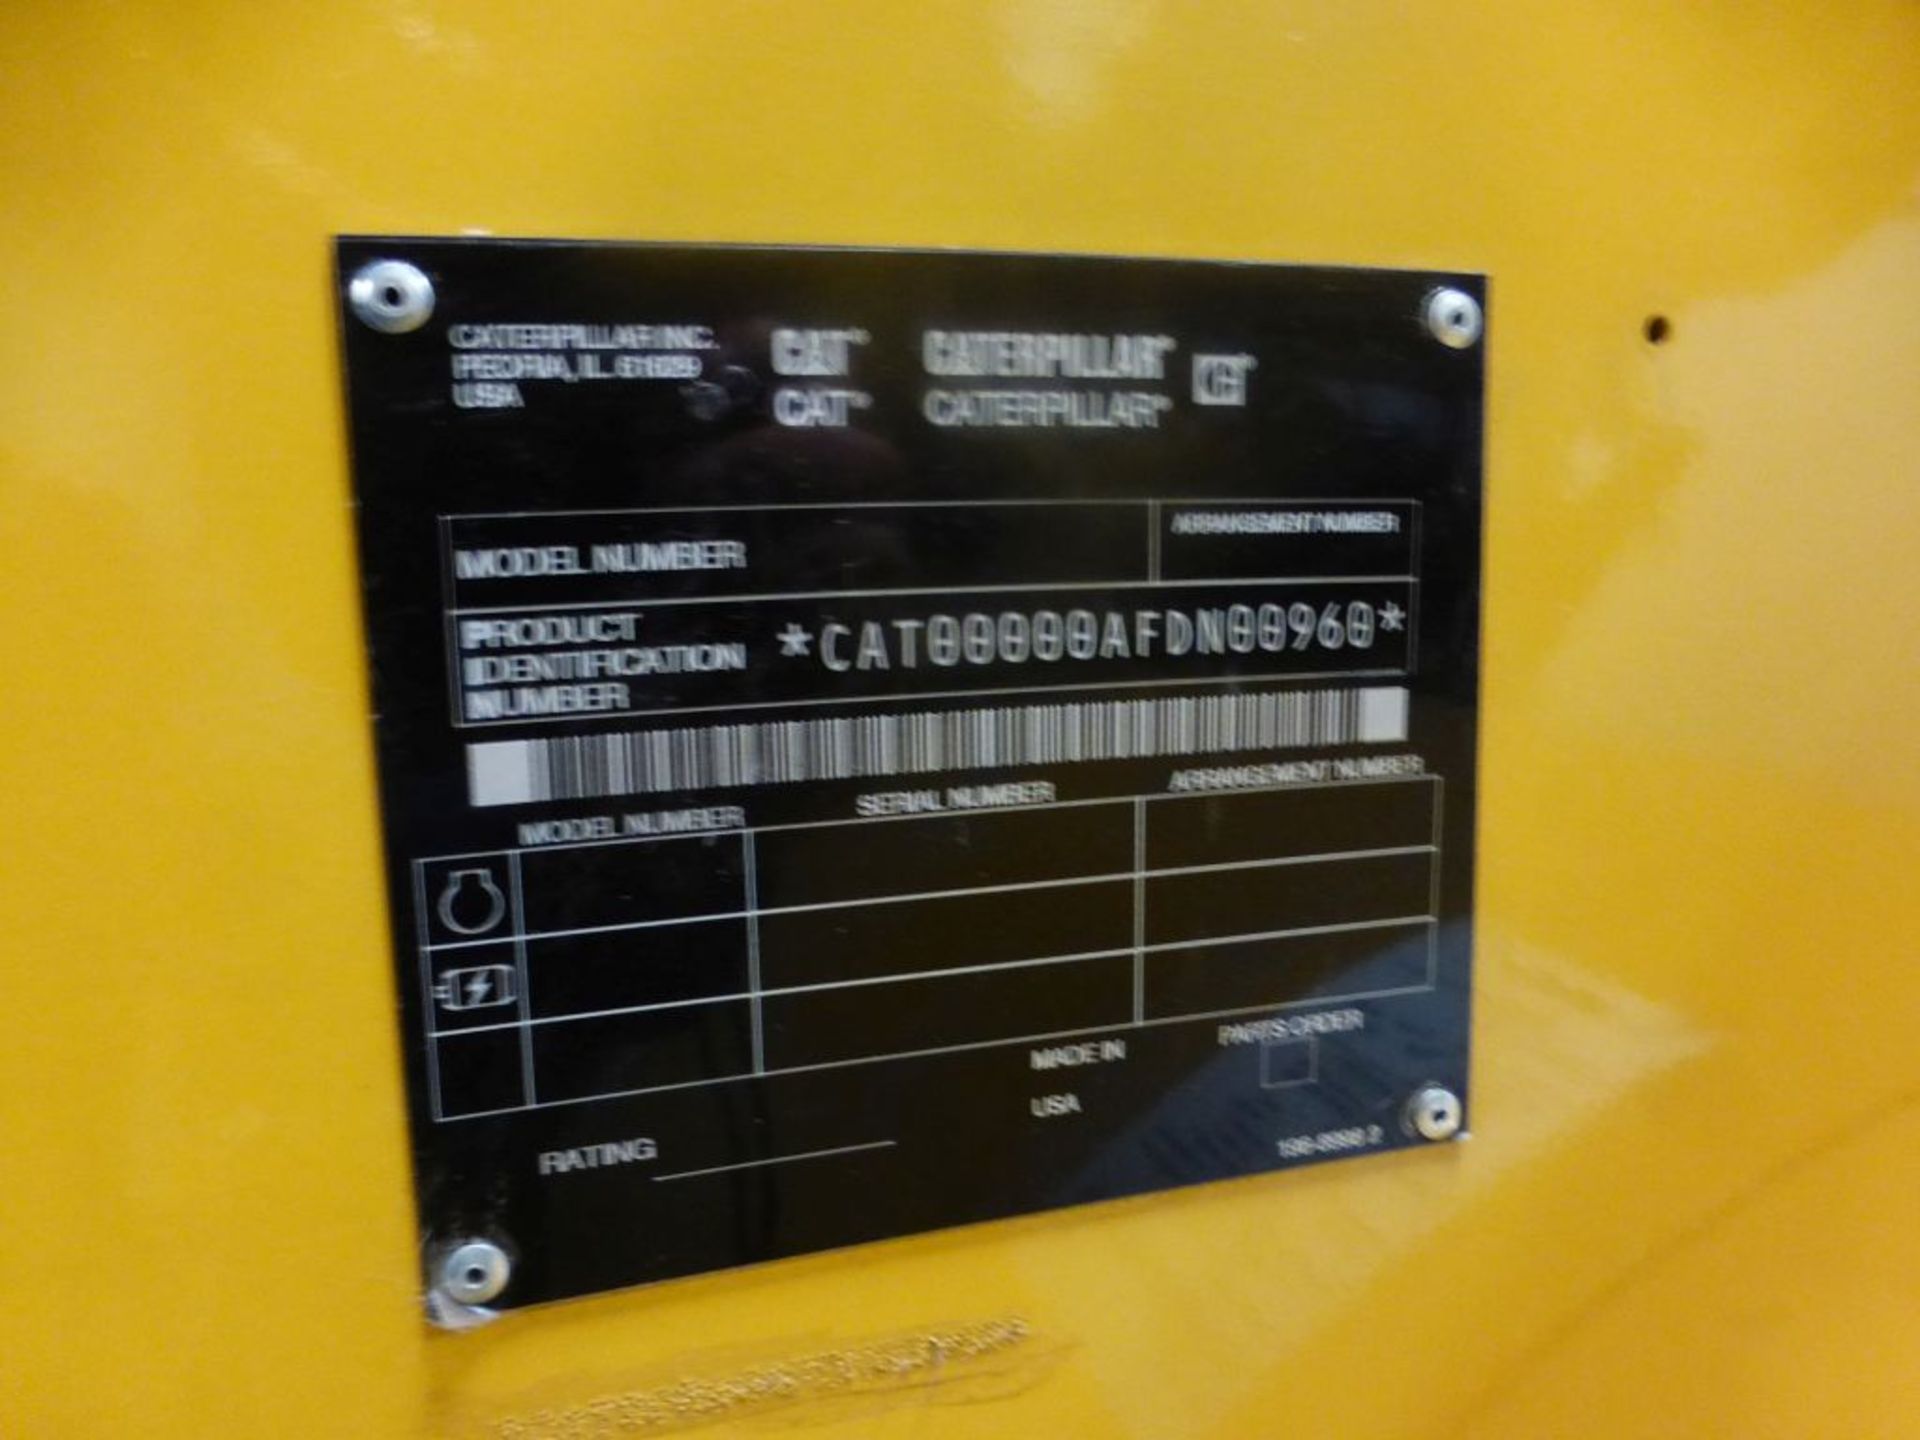 Caterpillar Diesel Generator | Part No. CAT00000AFDN00960; Model No. SR4B; 1825 KW; Prime; 4160V; - Image 12 of 23